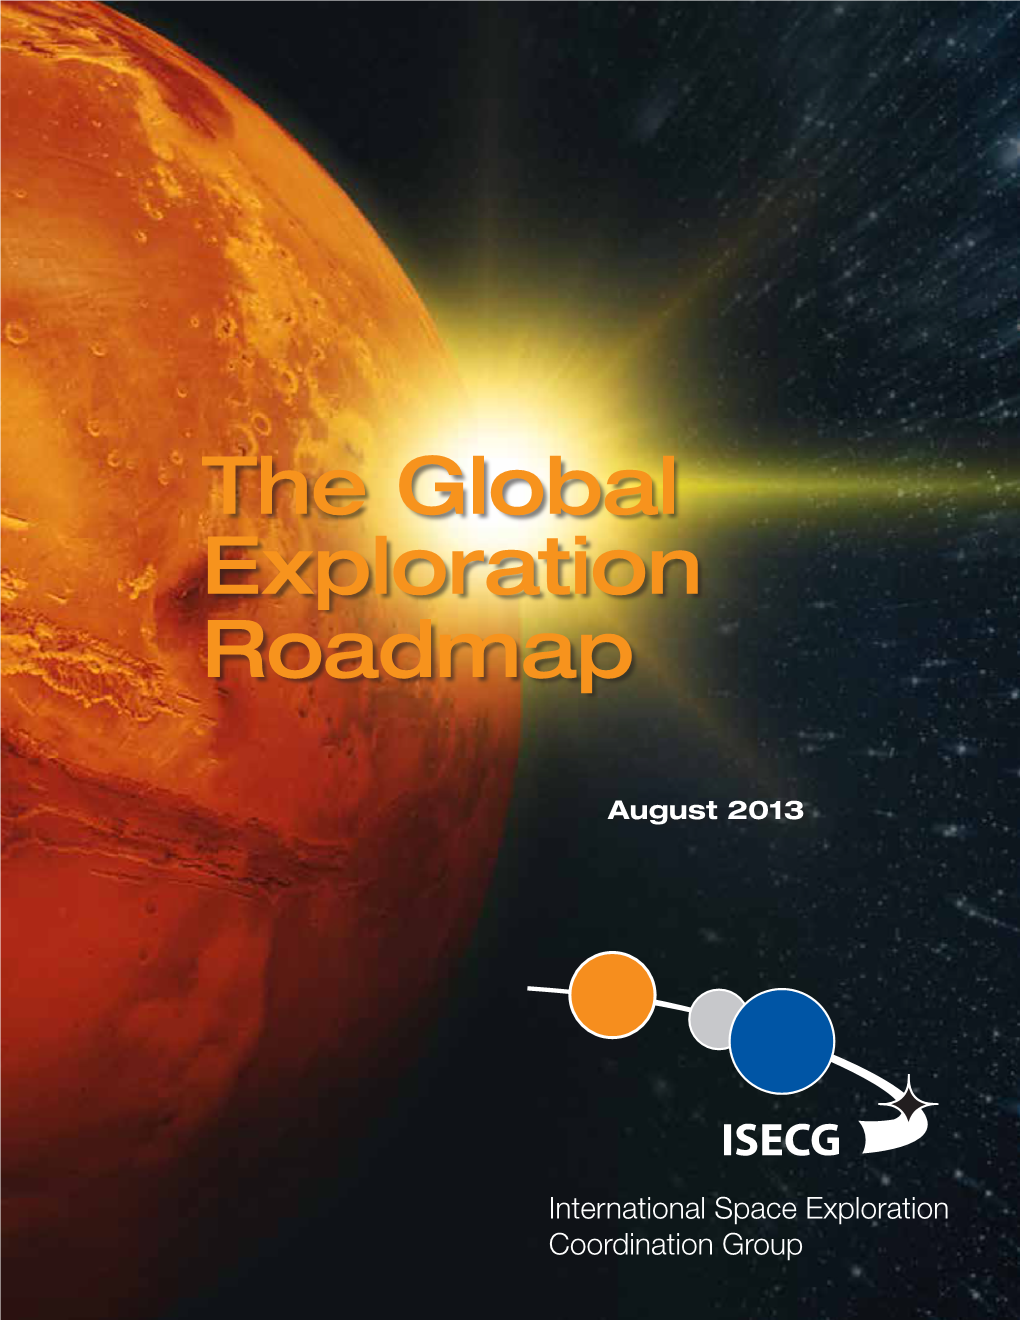 The Global Exploration Roadmap